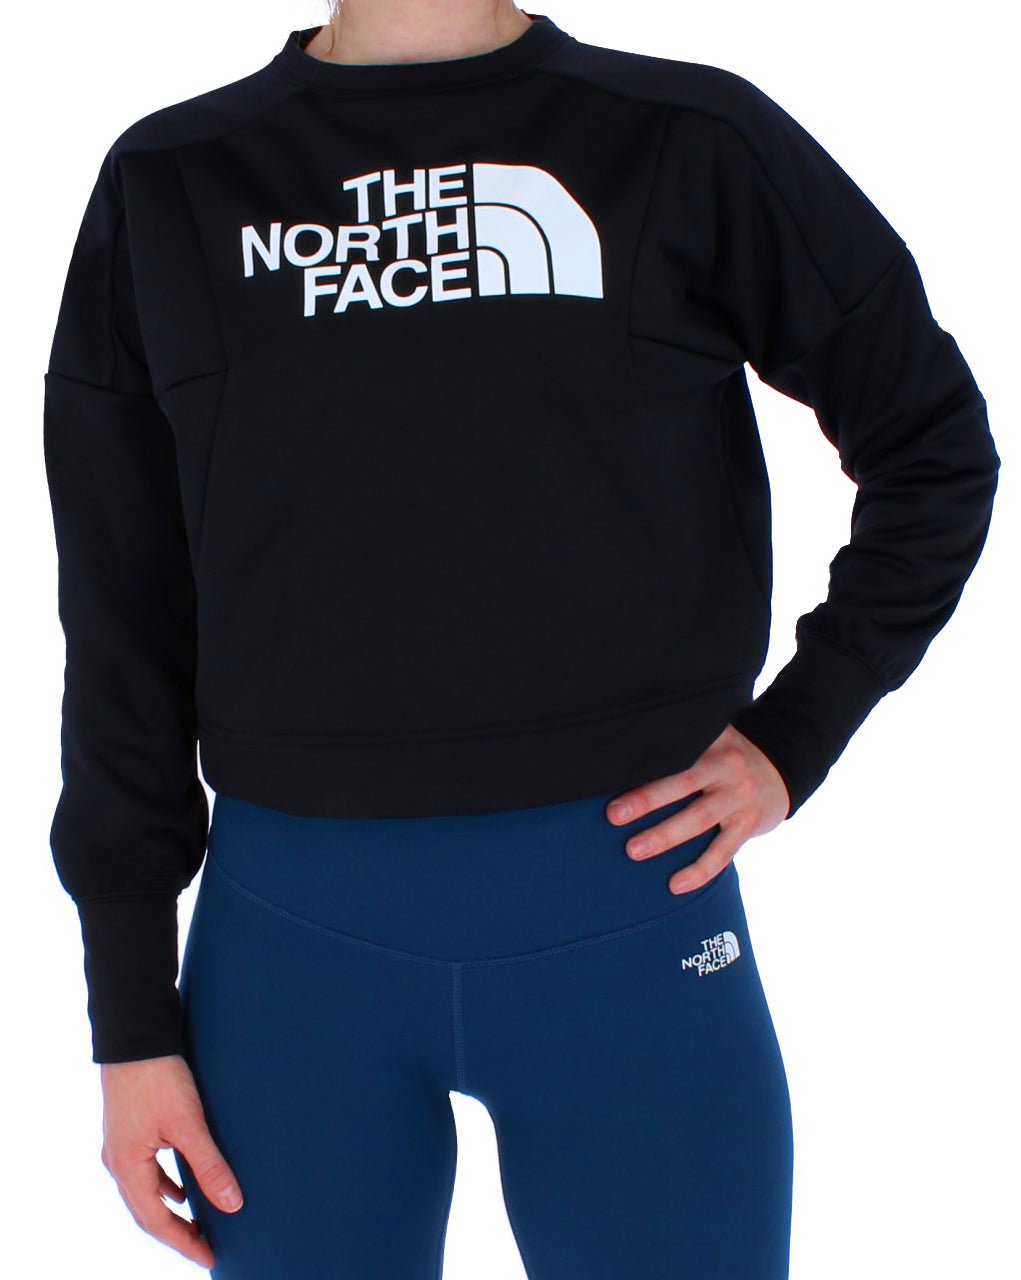 The North Face - TRAIN N LOGO Damen Fleecepullover - The North Face - SAGATOO - 192364002193